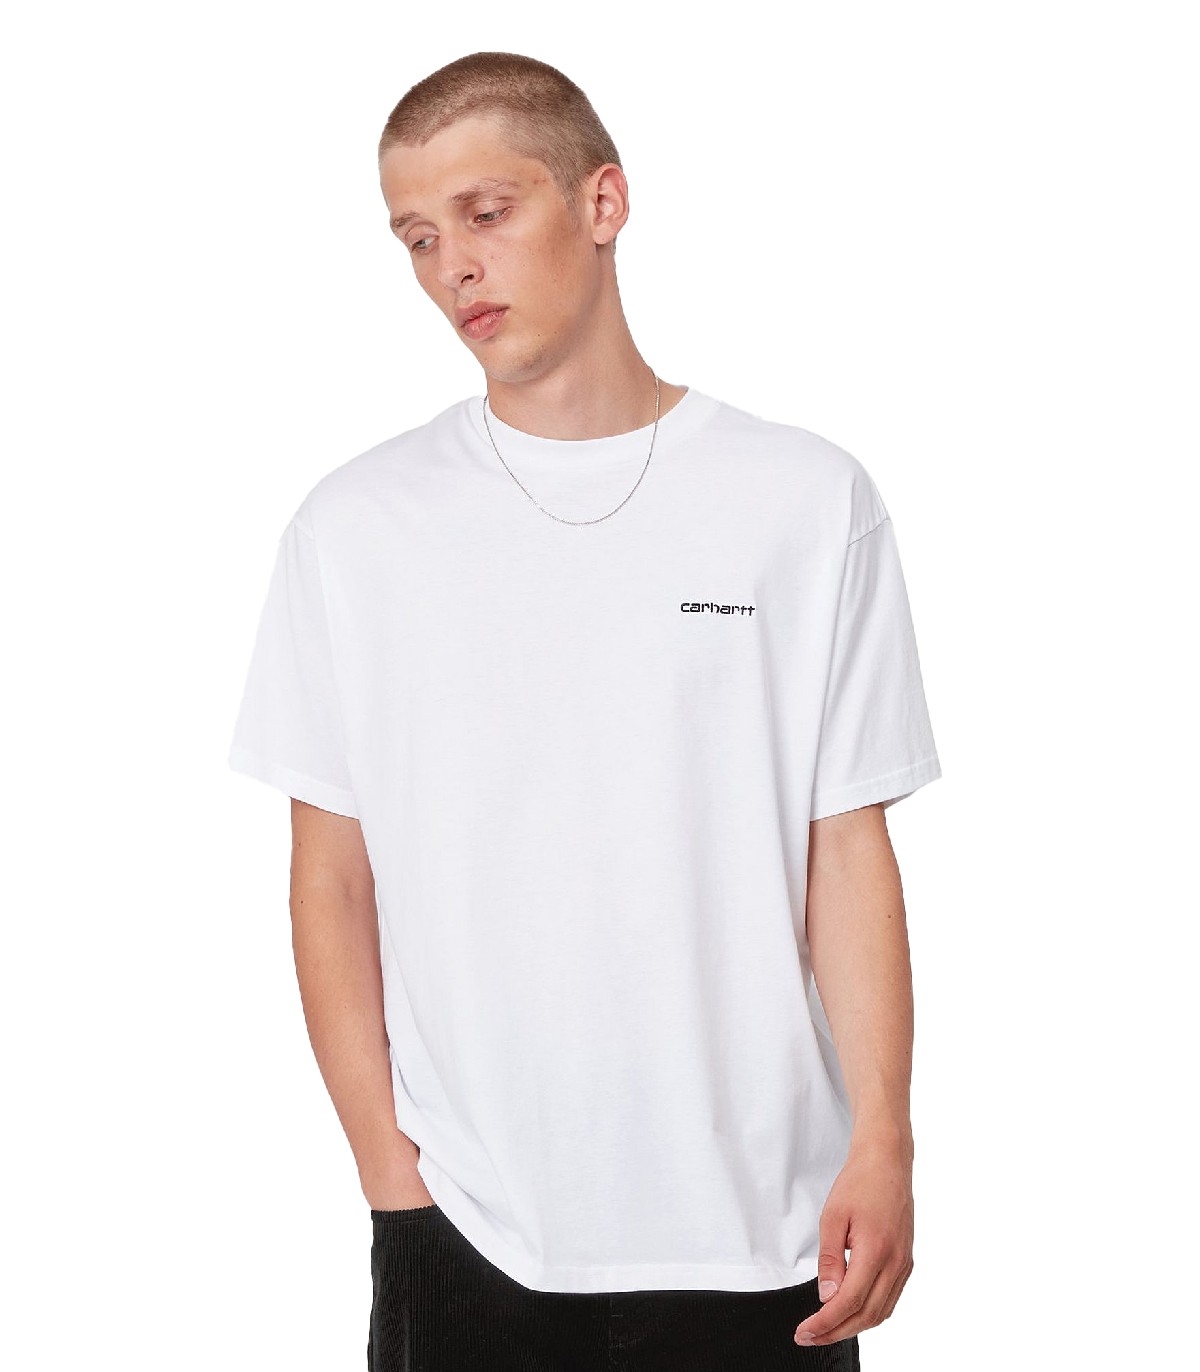 Carhartt WIP - Camiseta S/S Script Embroidery - Blanco